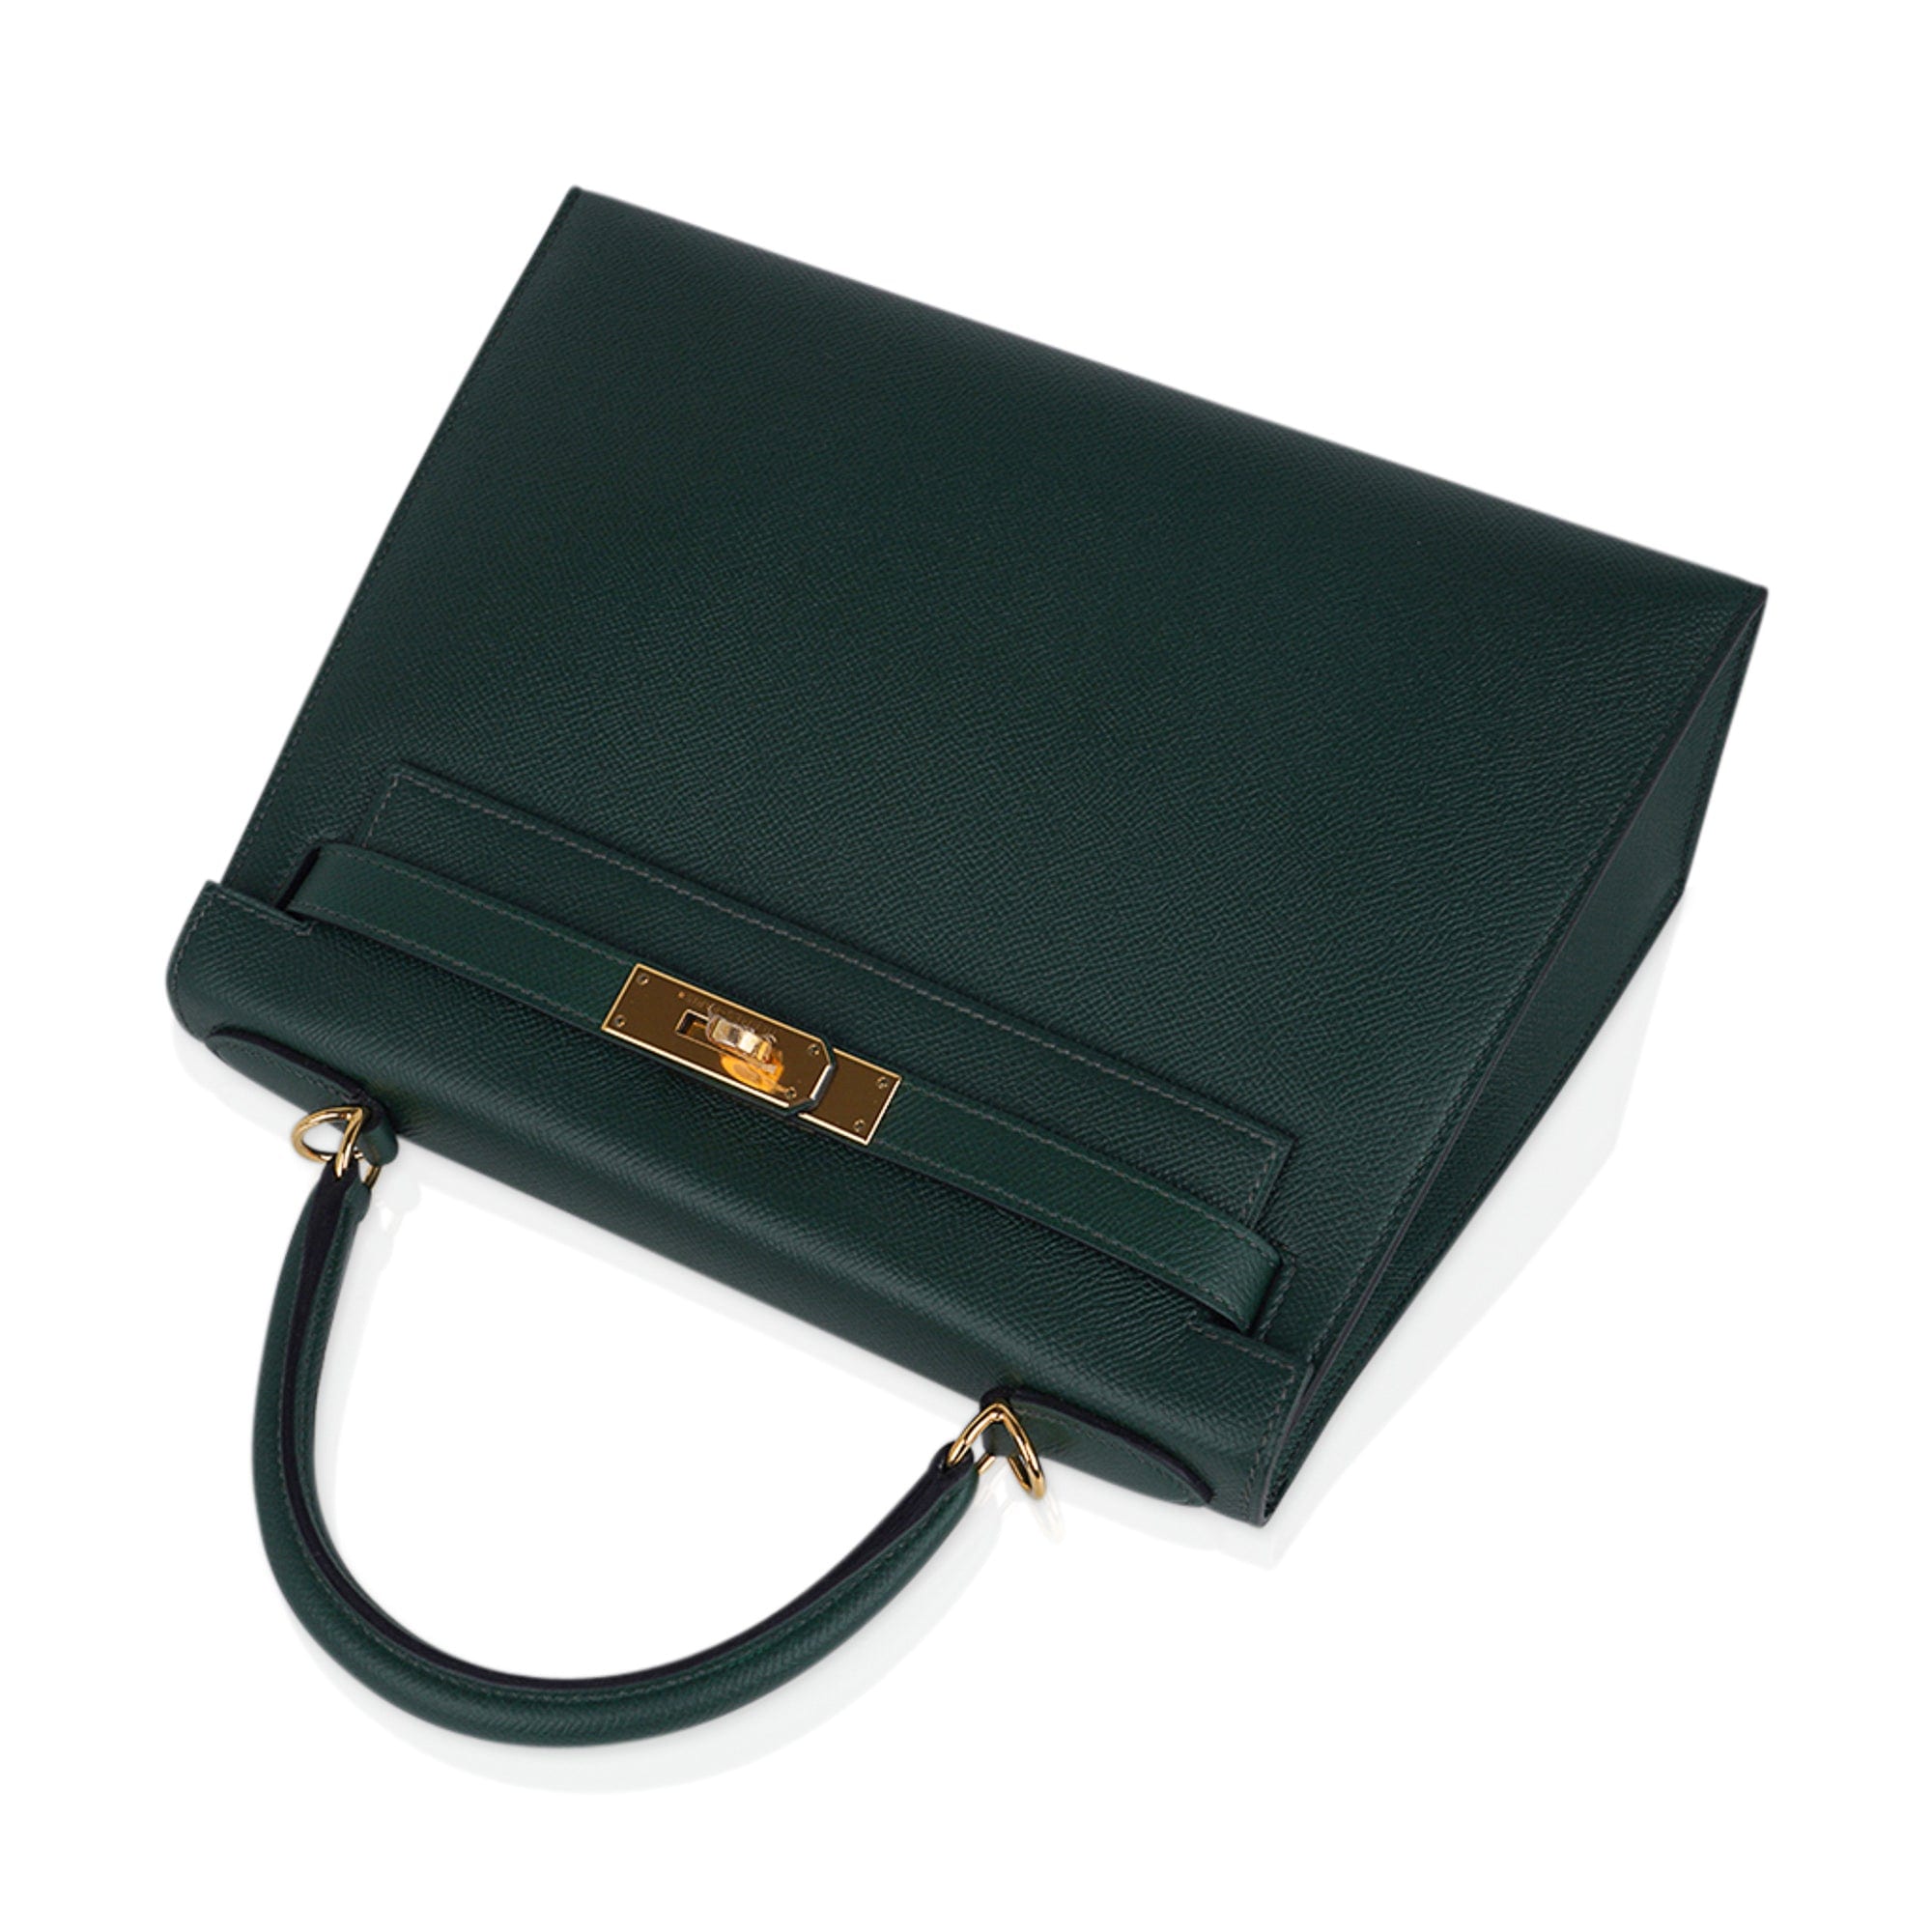 Hermès Kelly 28 cm Handbag in Vert de Gris Epsom Leather